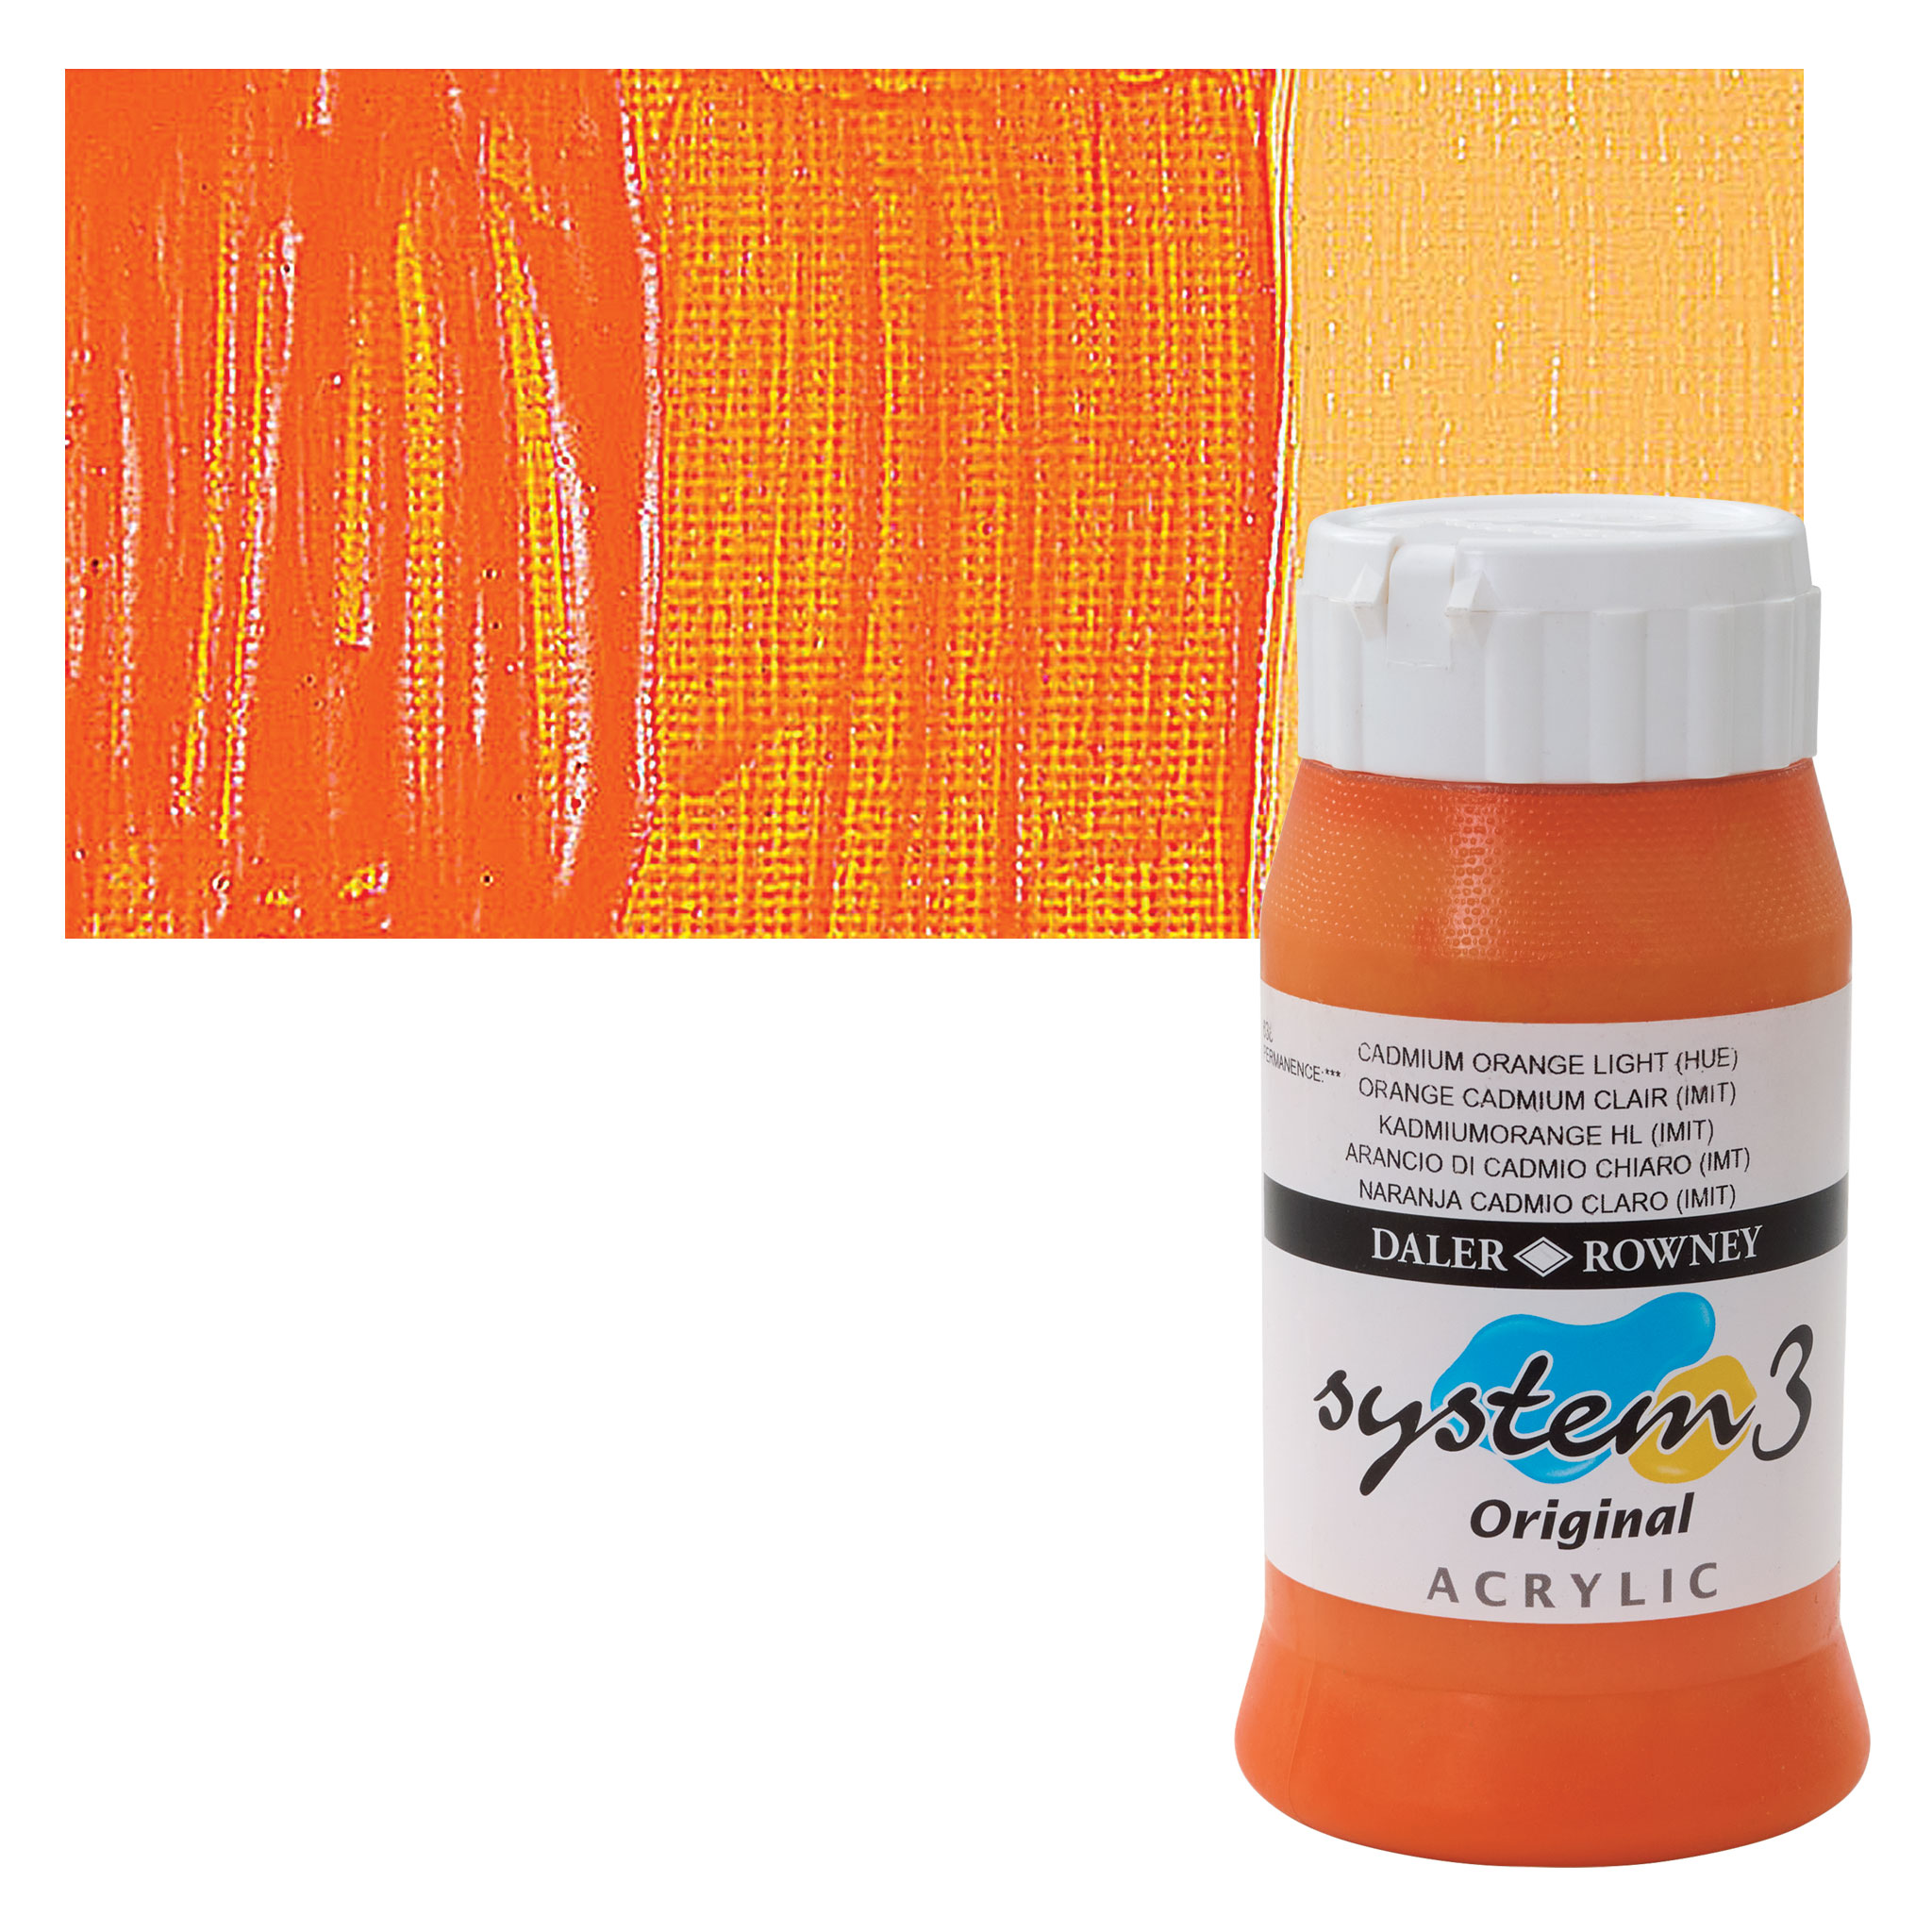 Daler Rowney : System 3 Acrylic Paint : 500ml : Cadmium Orange Light Hue